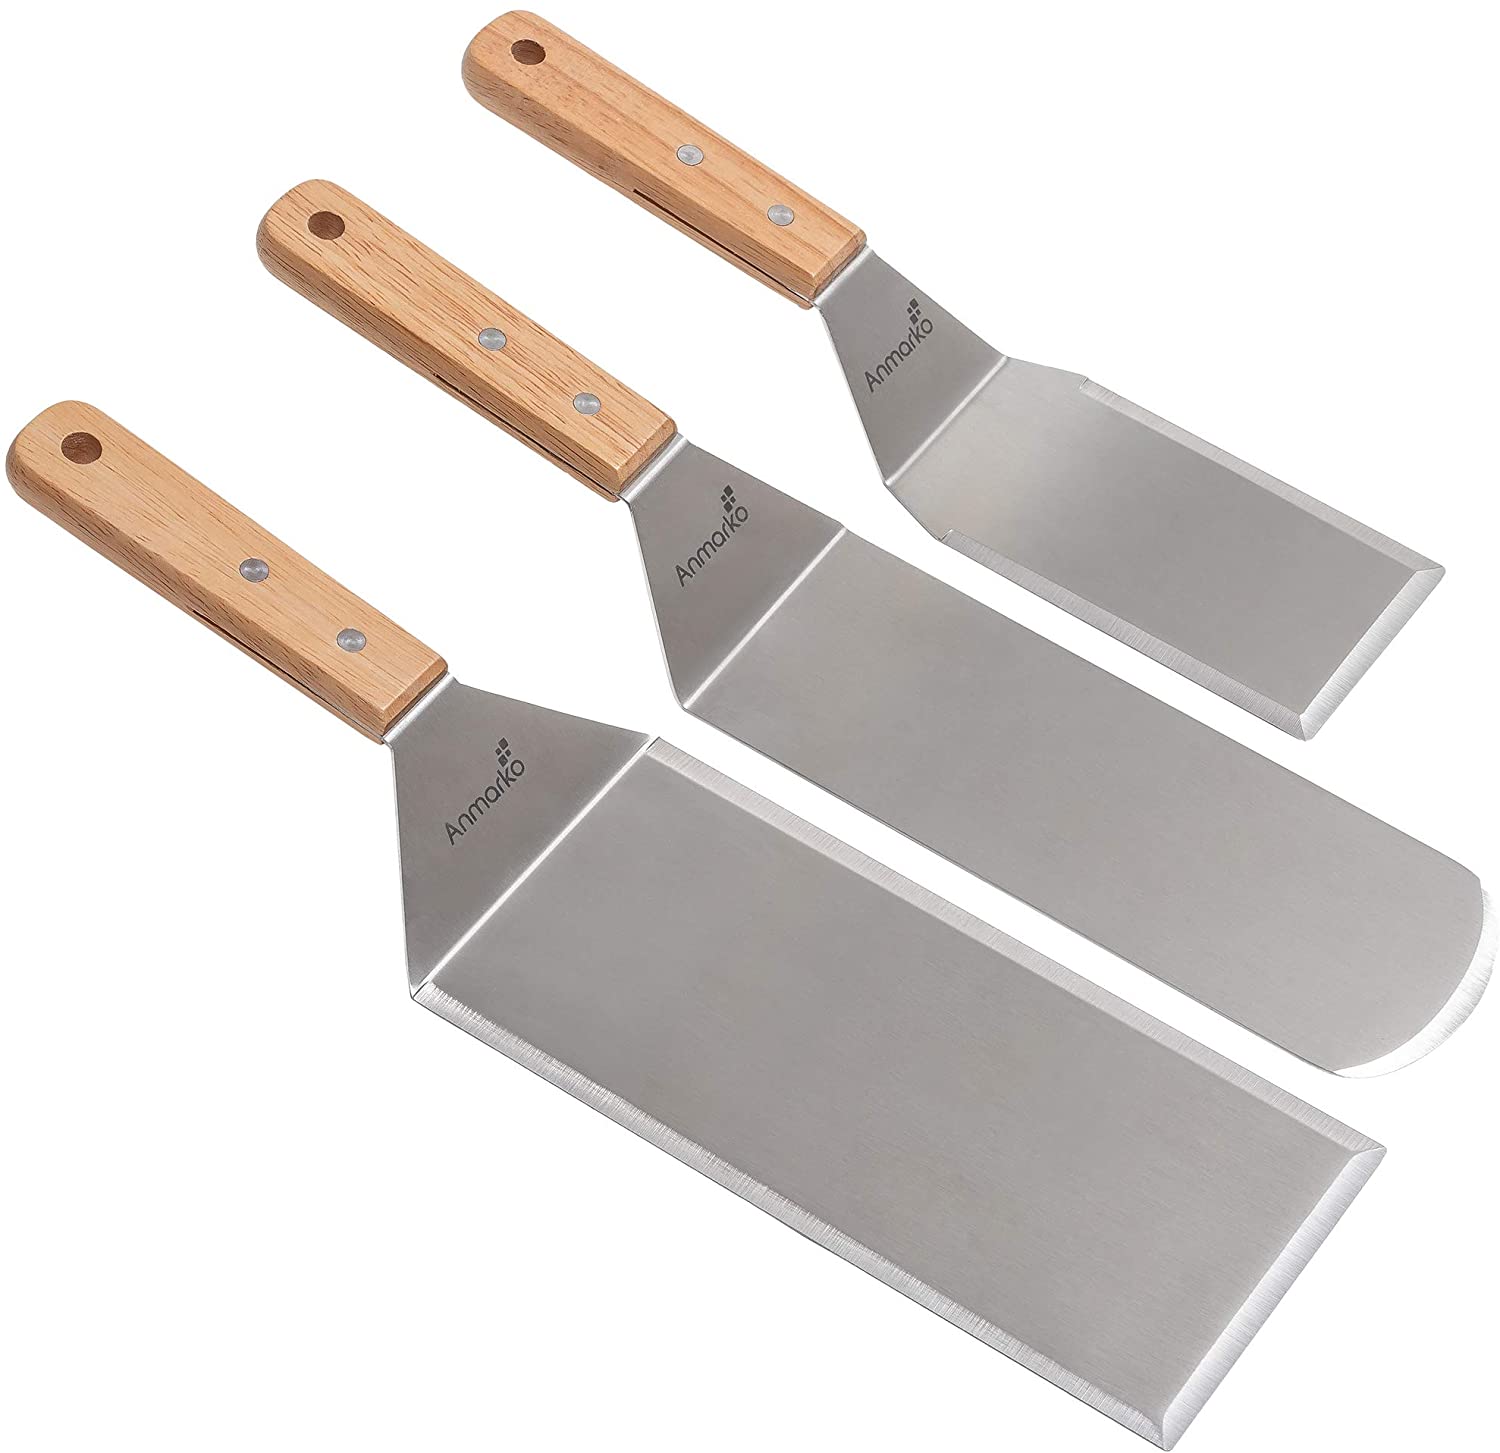 Amarko stainless steel spatula set of three